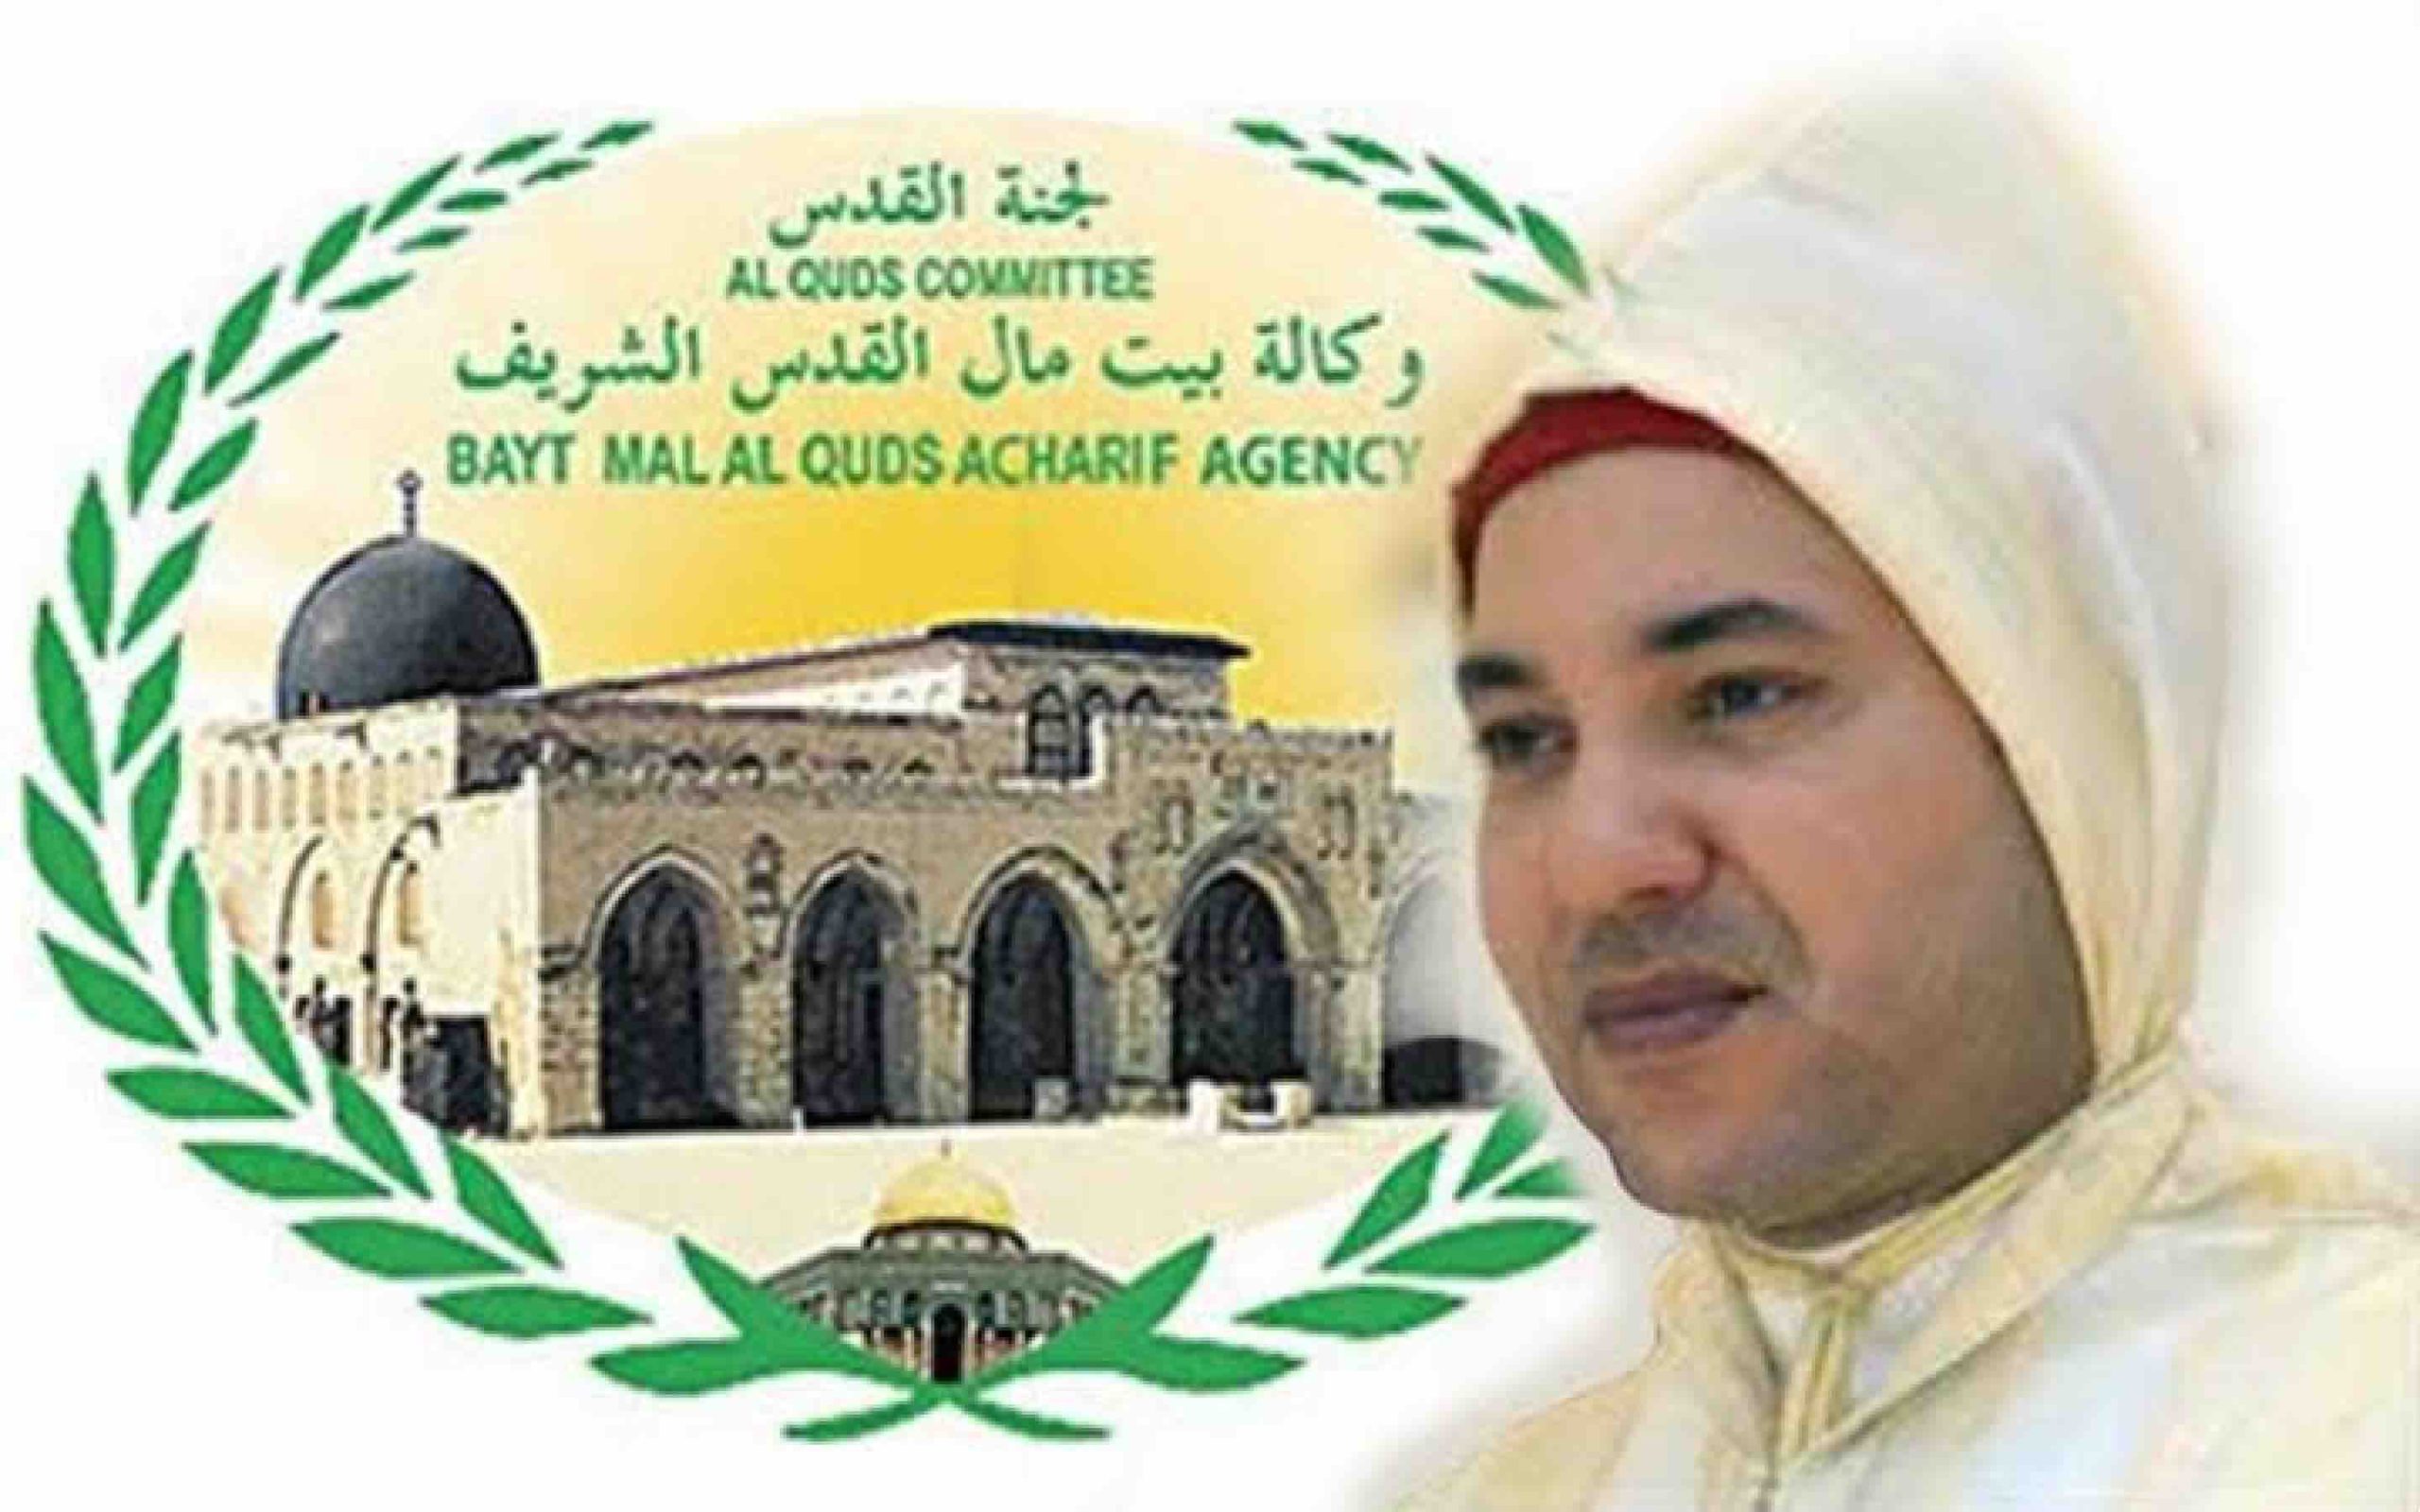 Comité Al-Qods roi Maroc Mohammed 6 Agence Bayt Mal Al-Qods Acharif